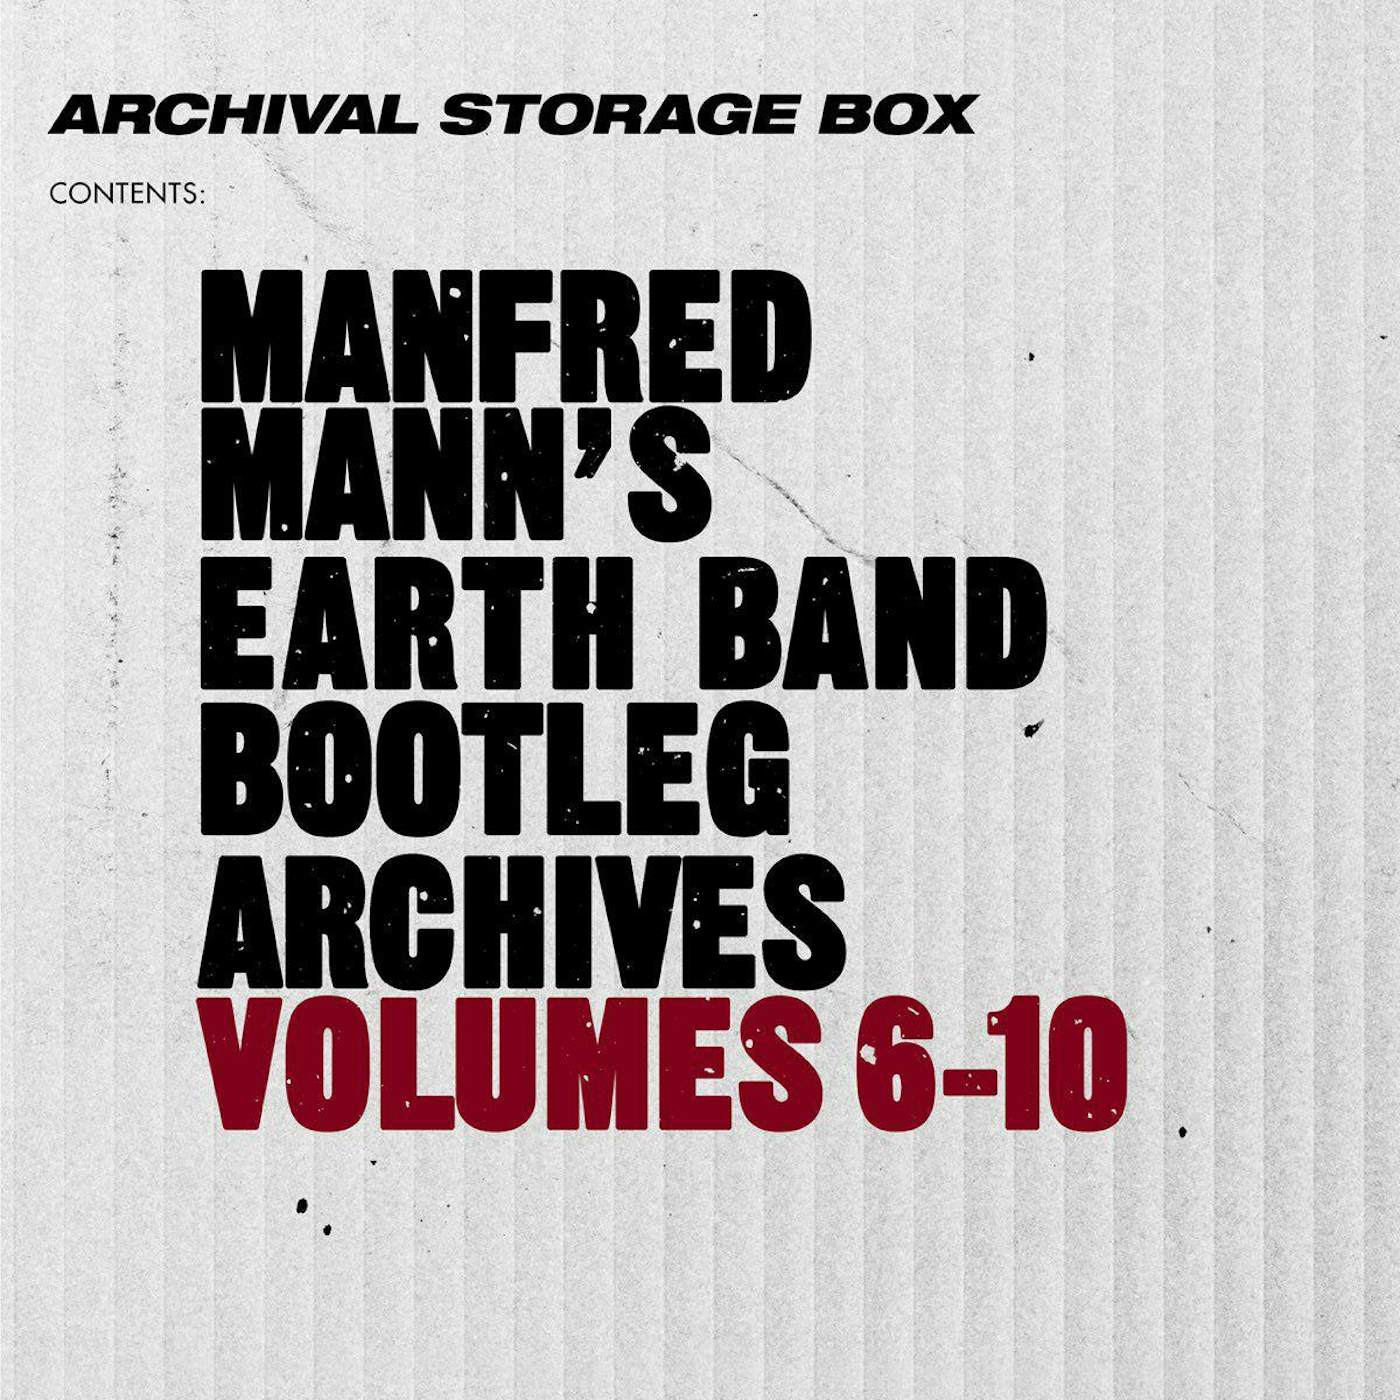 Manfred Mann's Earth Band Bootleg Archives 6-10 CD Box Set